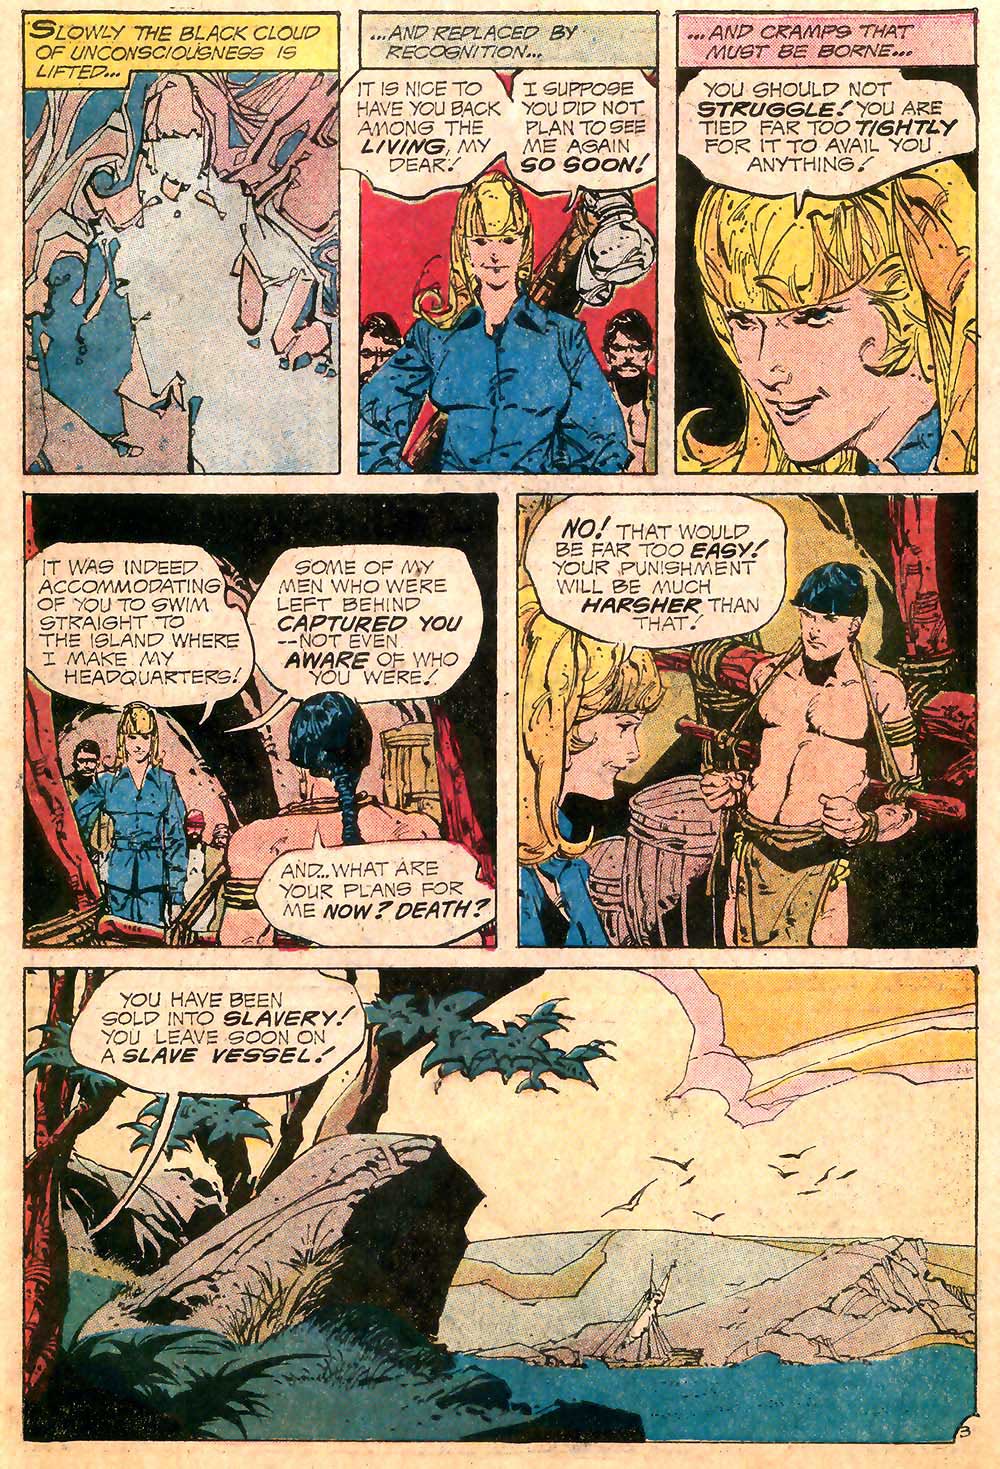 Adventure Comics #429 (1973) by Steve Skeates and Alex Nino